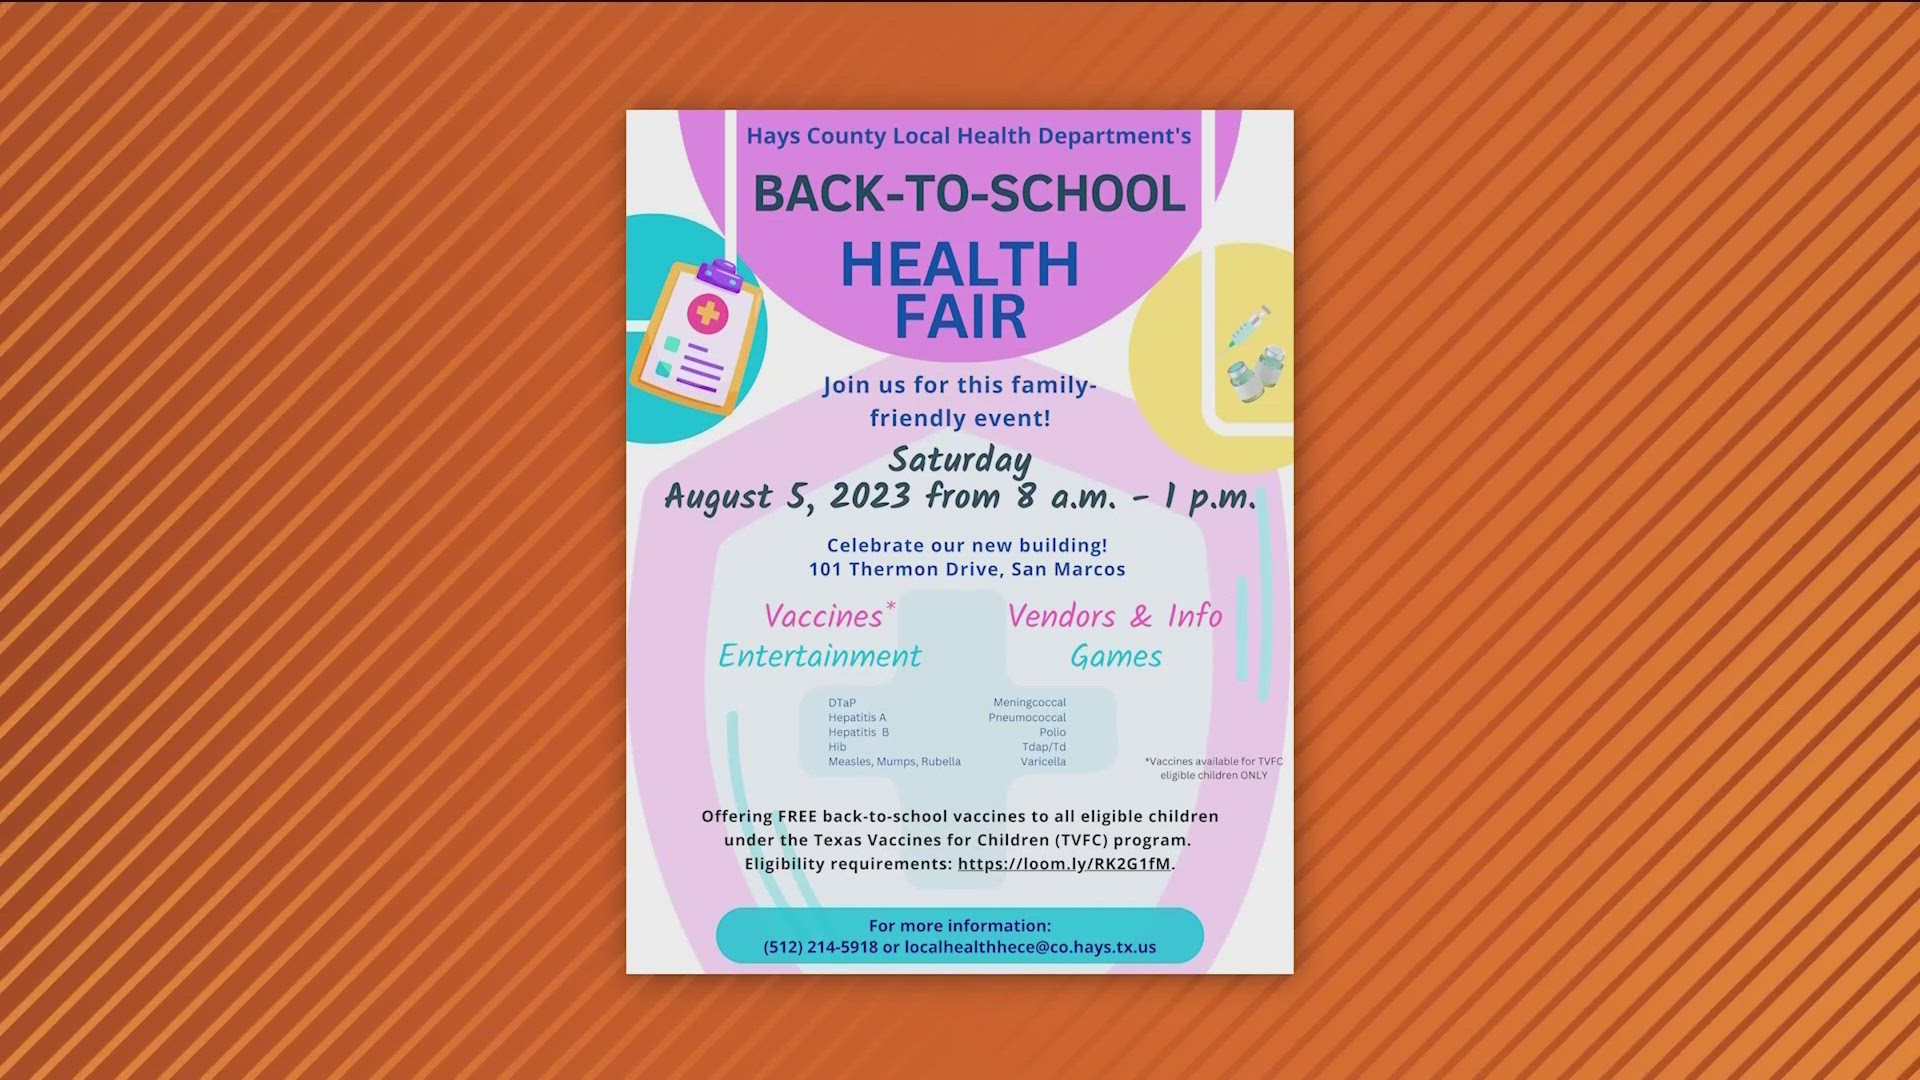 Hays County will host a back-to-school health fair next week.